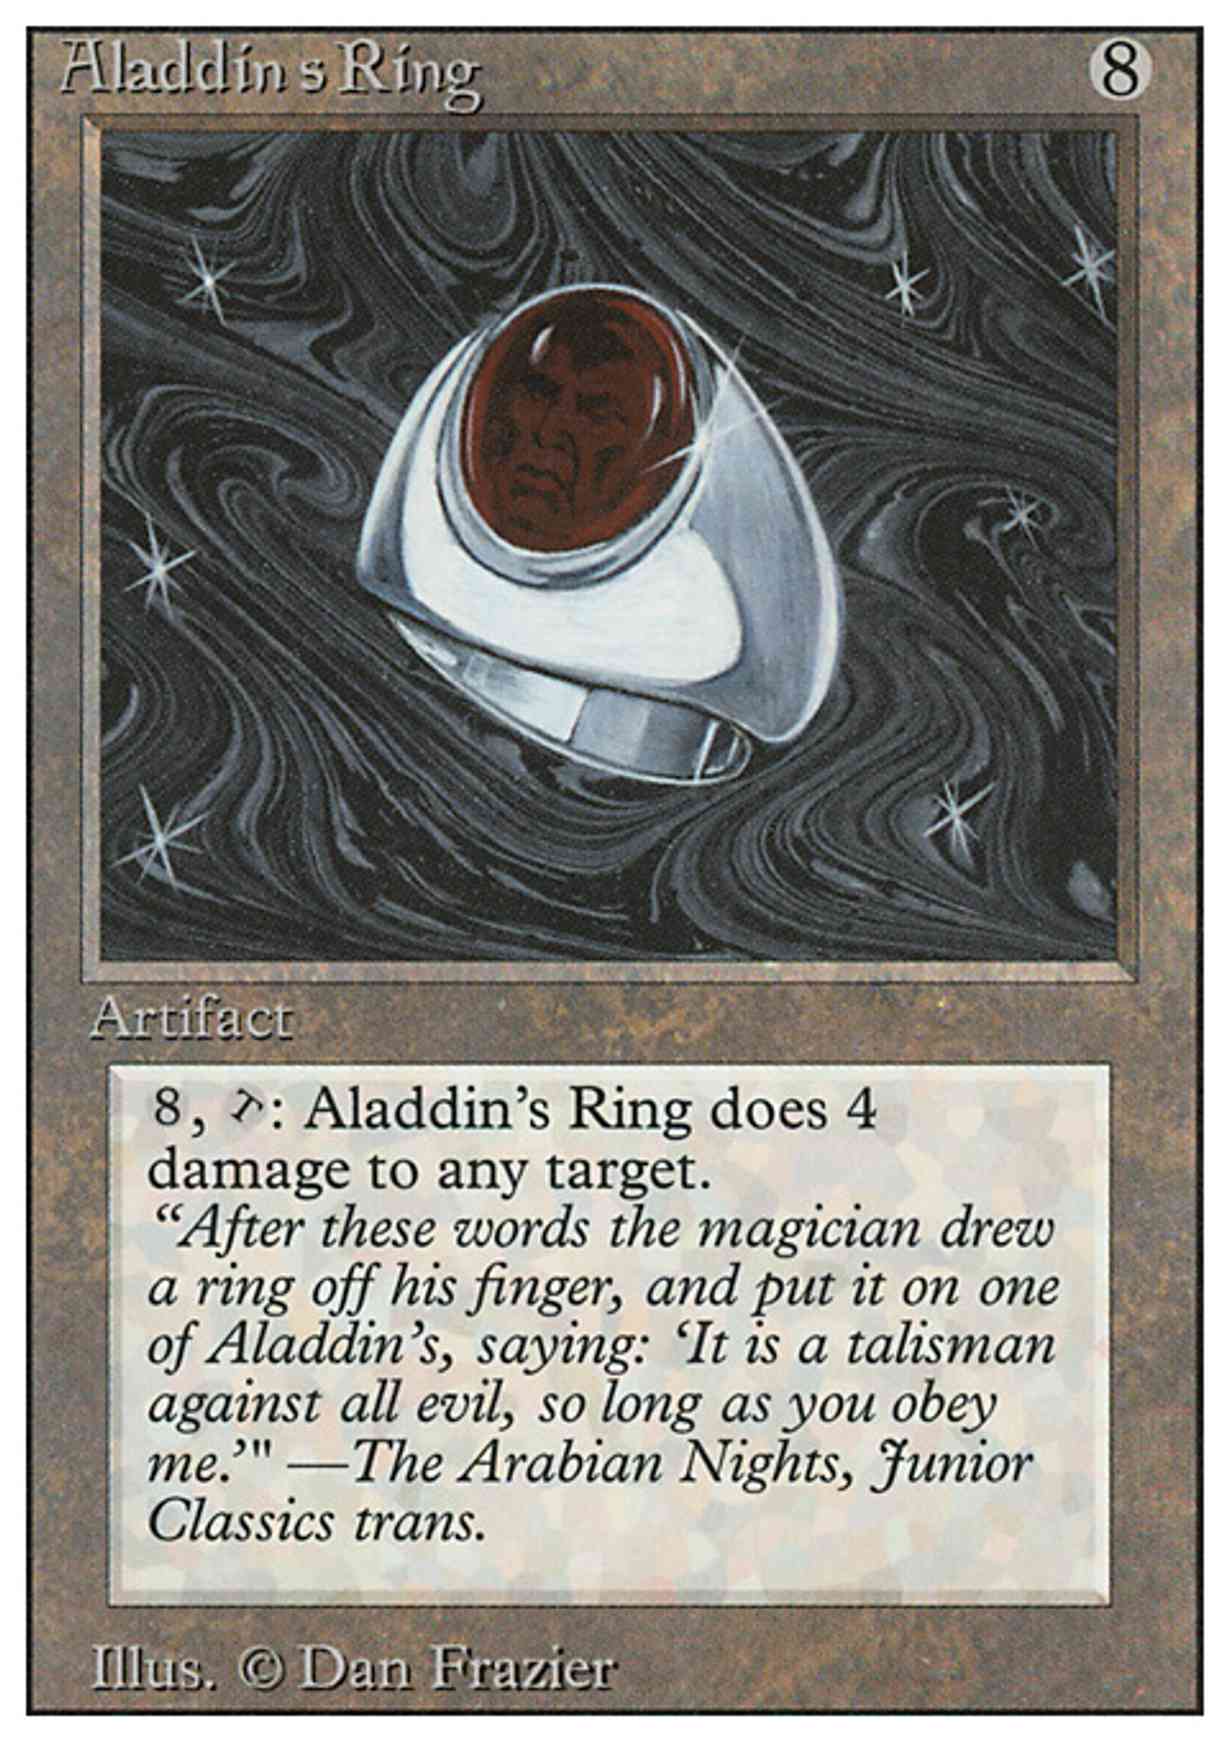 Aladdin's Ring magic card front